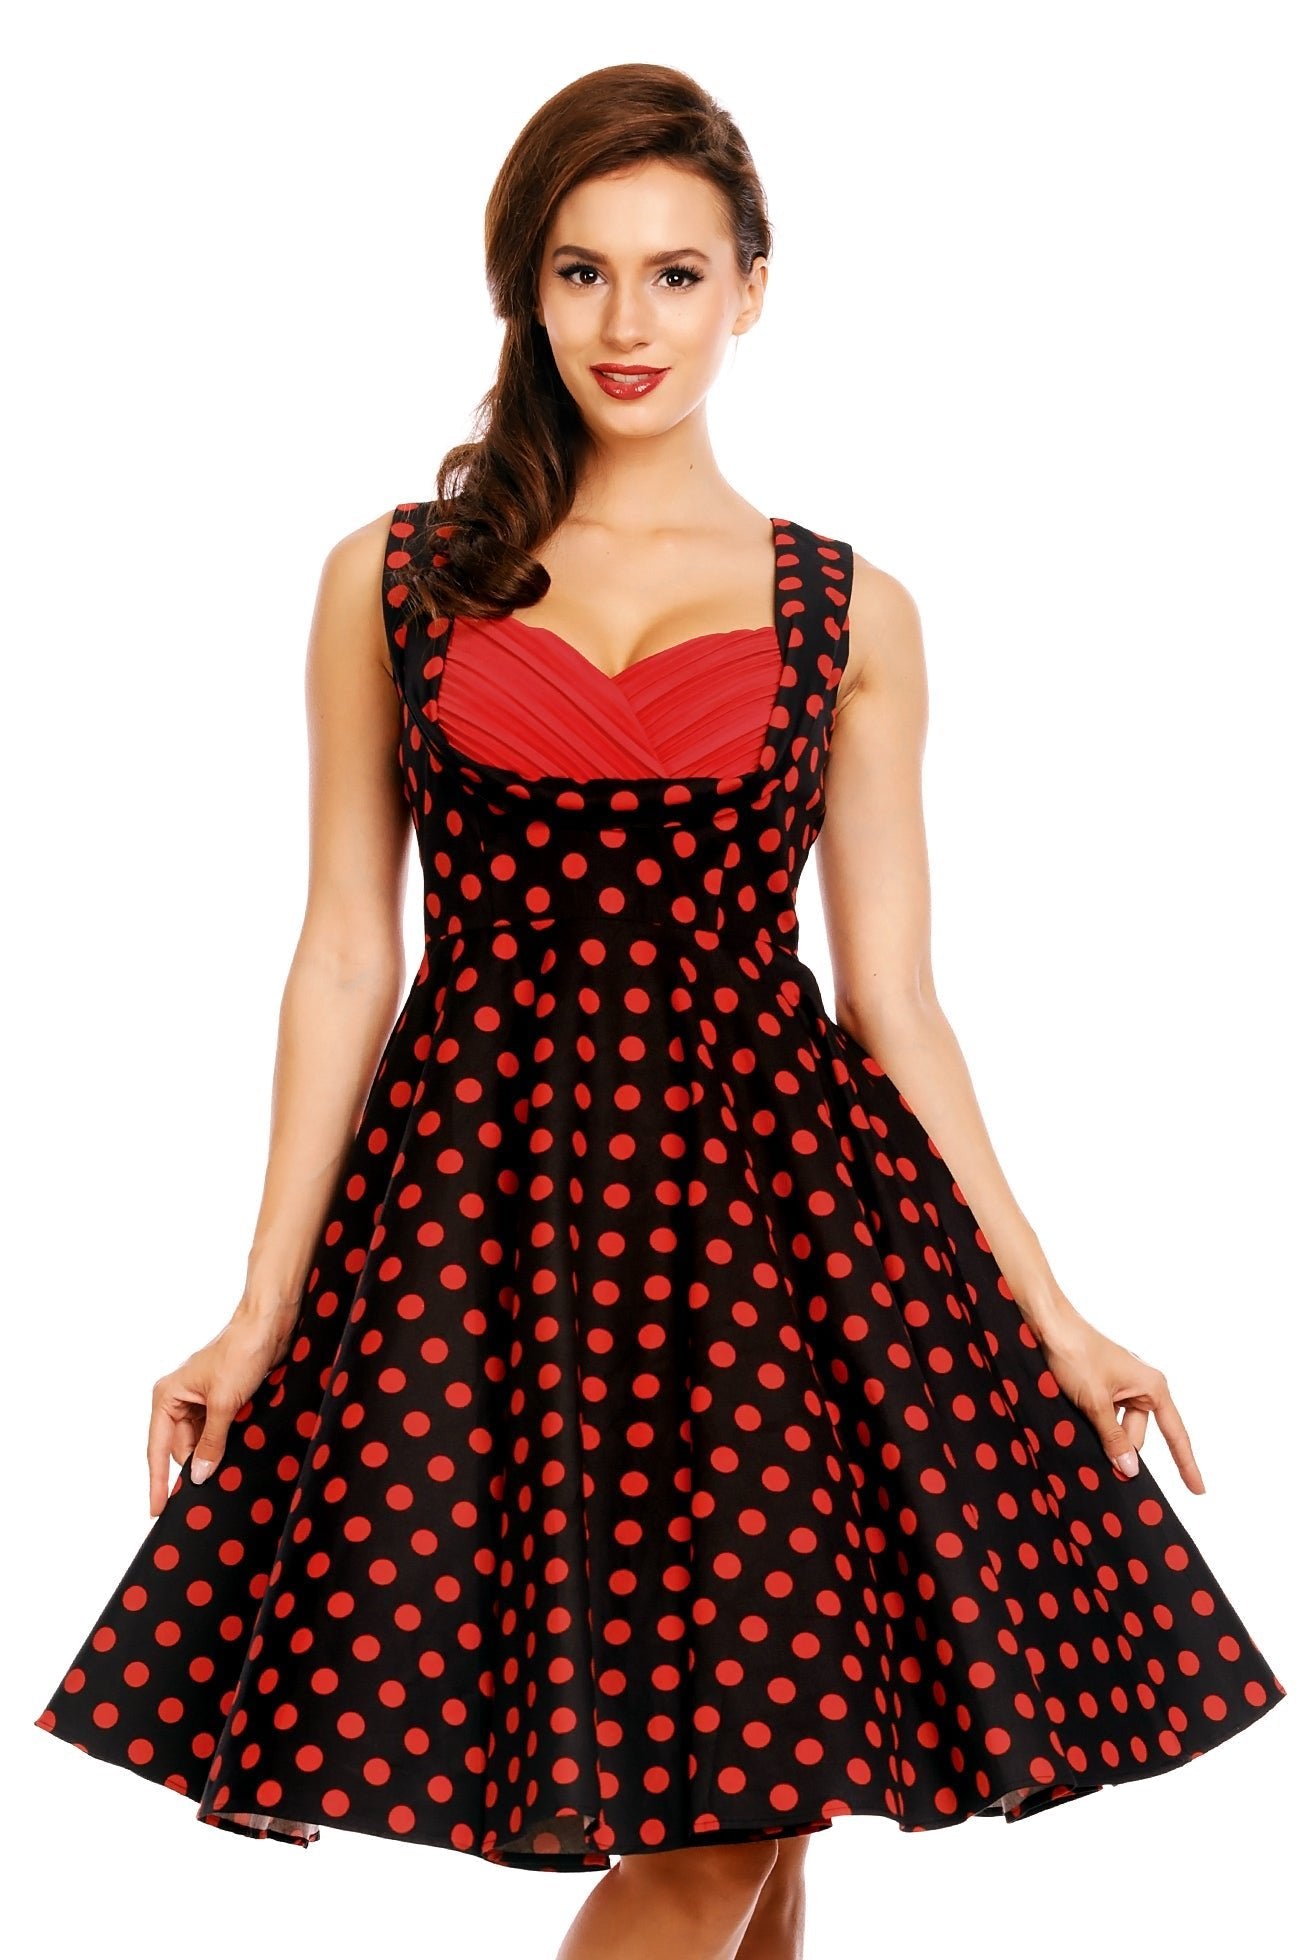 Vintage Glamorous Swing Dress in Black-Red Polka Dots